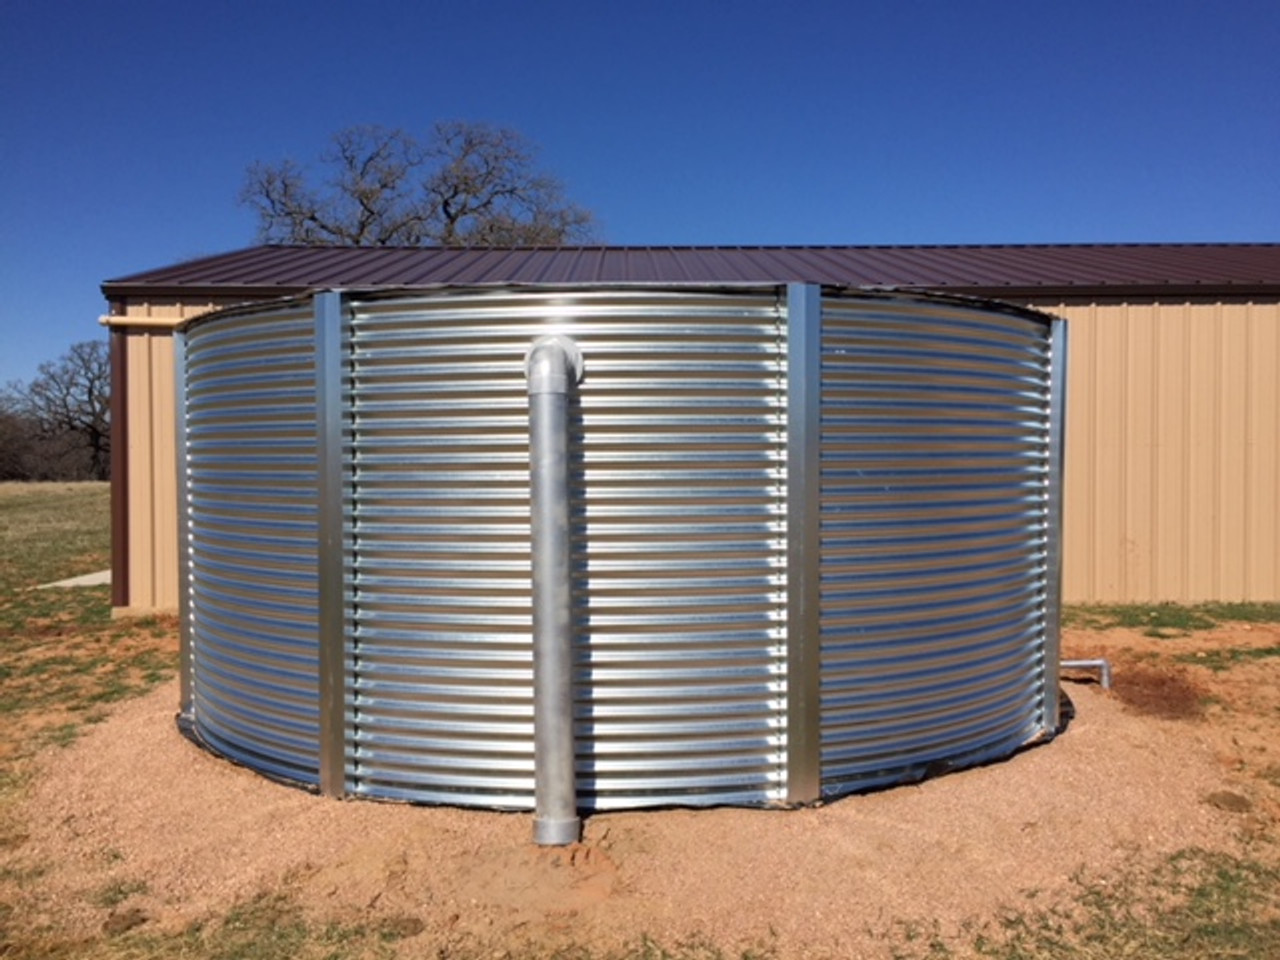 Types of Water Storage Tanks for Municipalities – Cunningham Tank